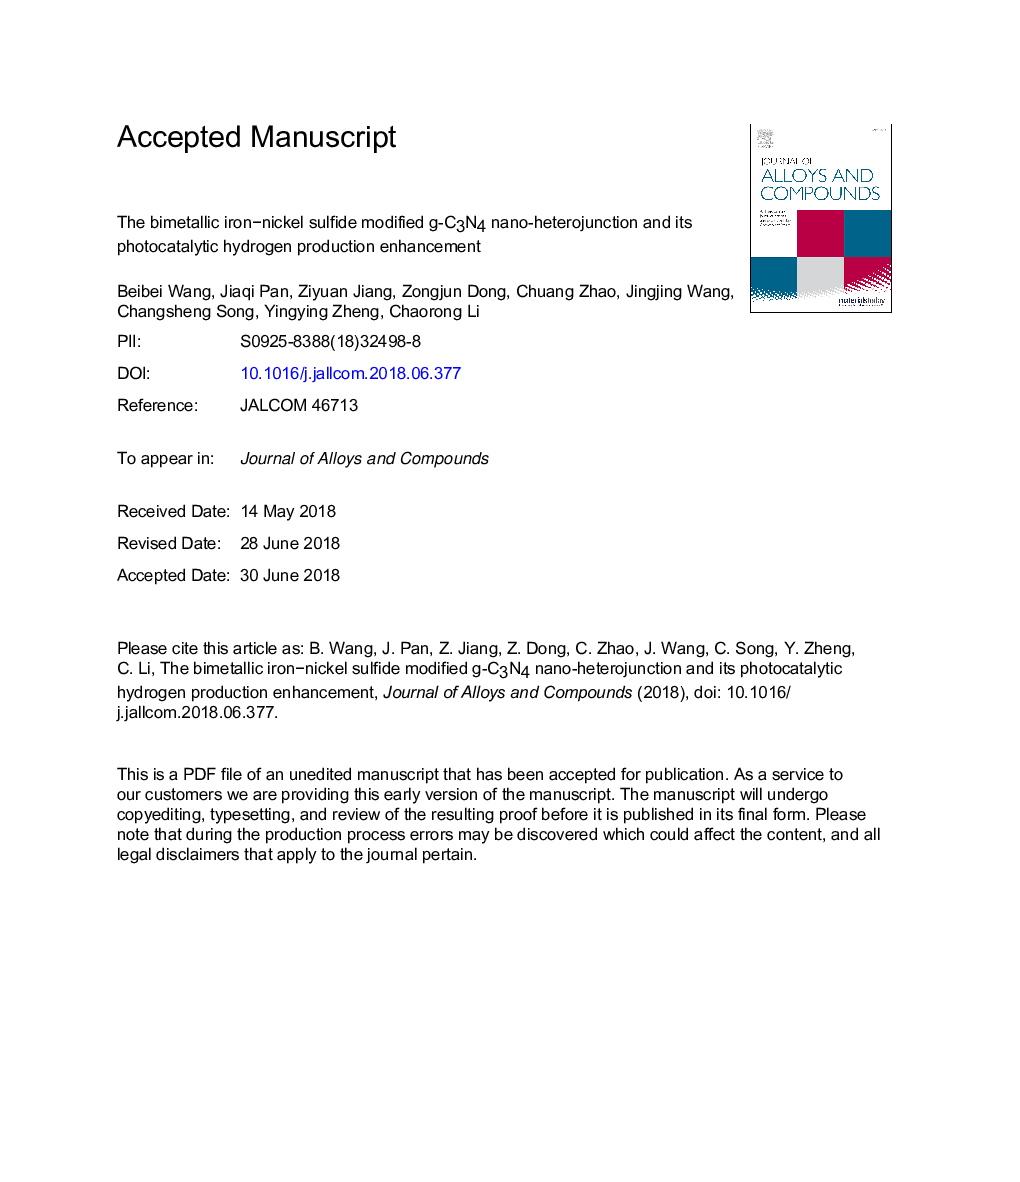 The bimetallic ironânickel sulfide modified g-C3N4 nano-heterojunction and its photocatalytic hydrogen production enhancement